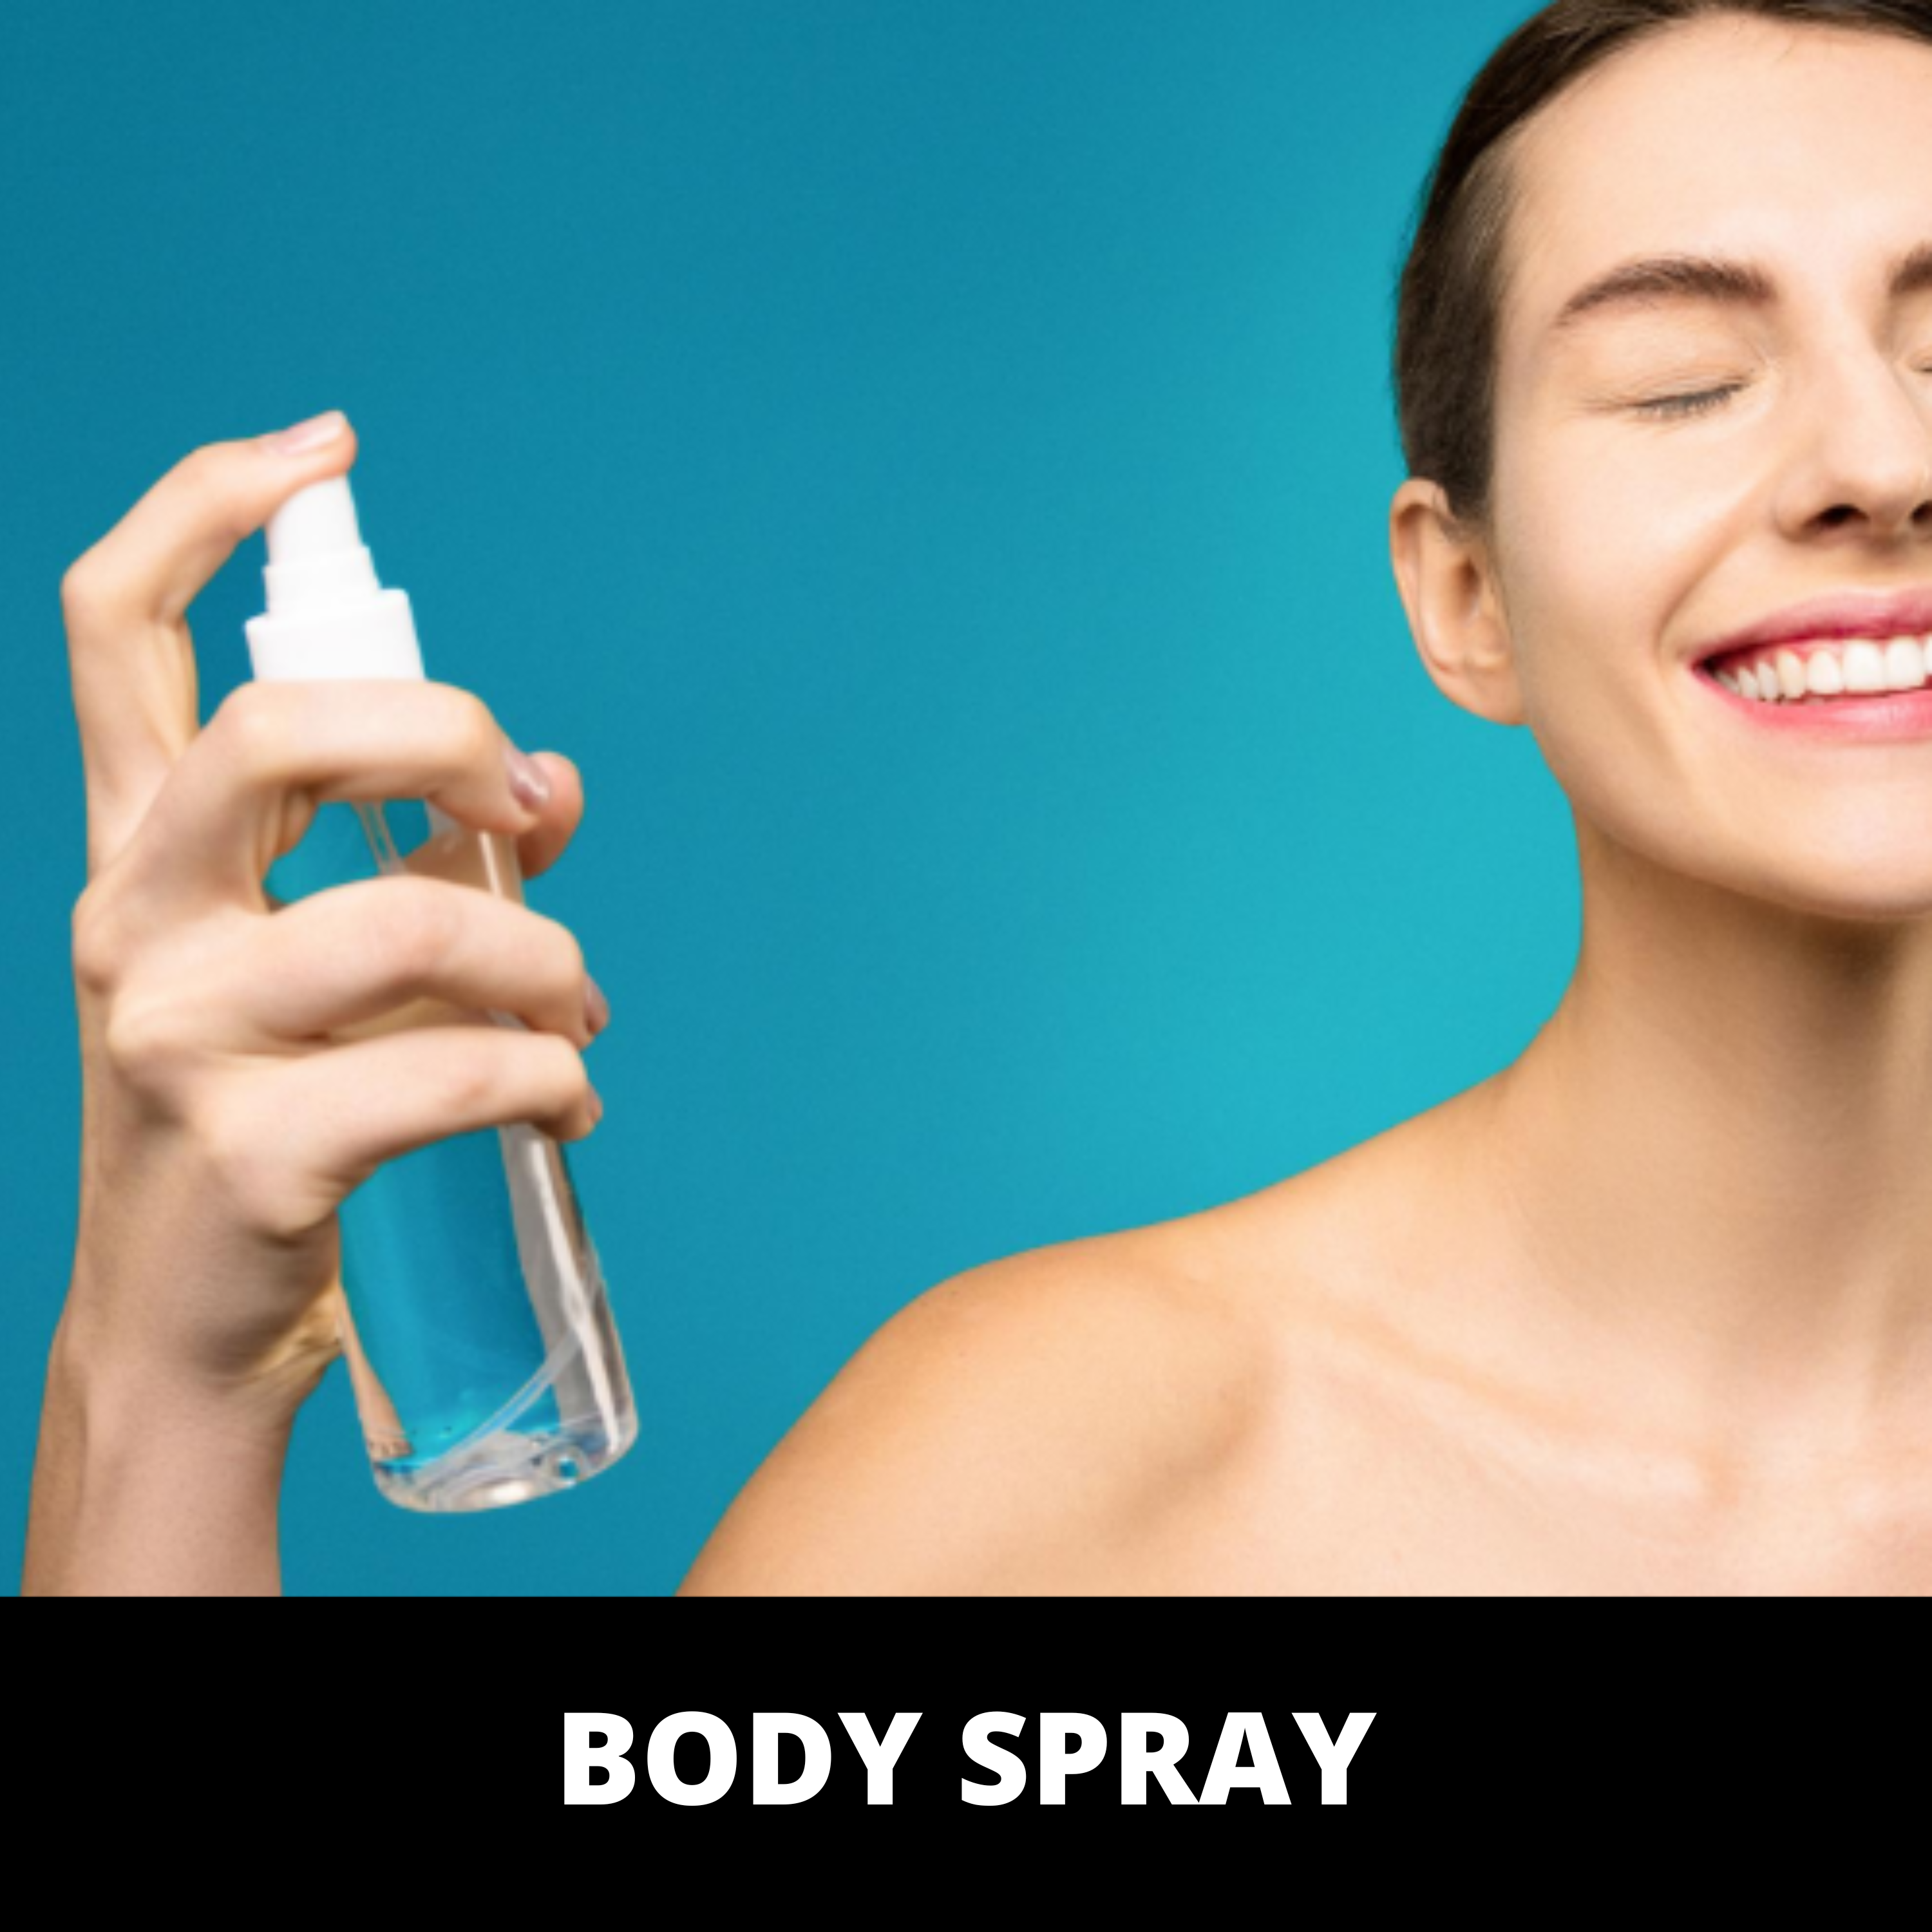 PRODUCT TYPE: Body Spray